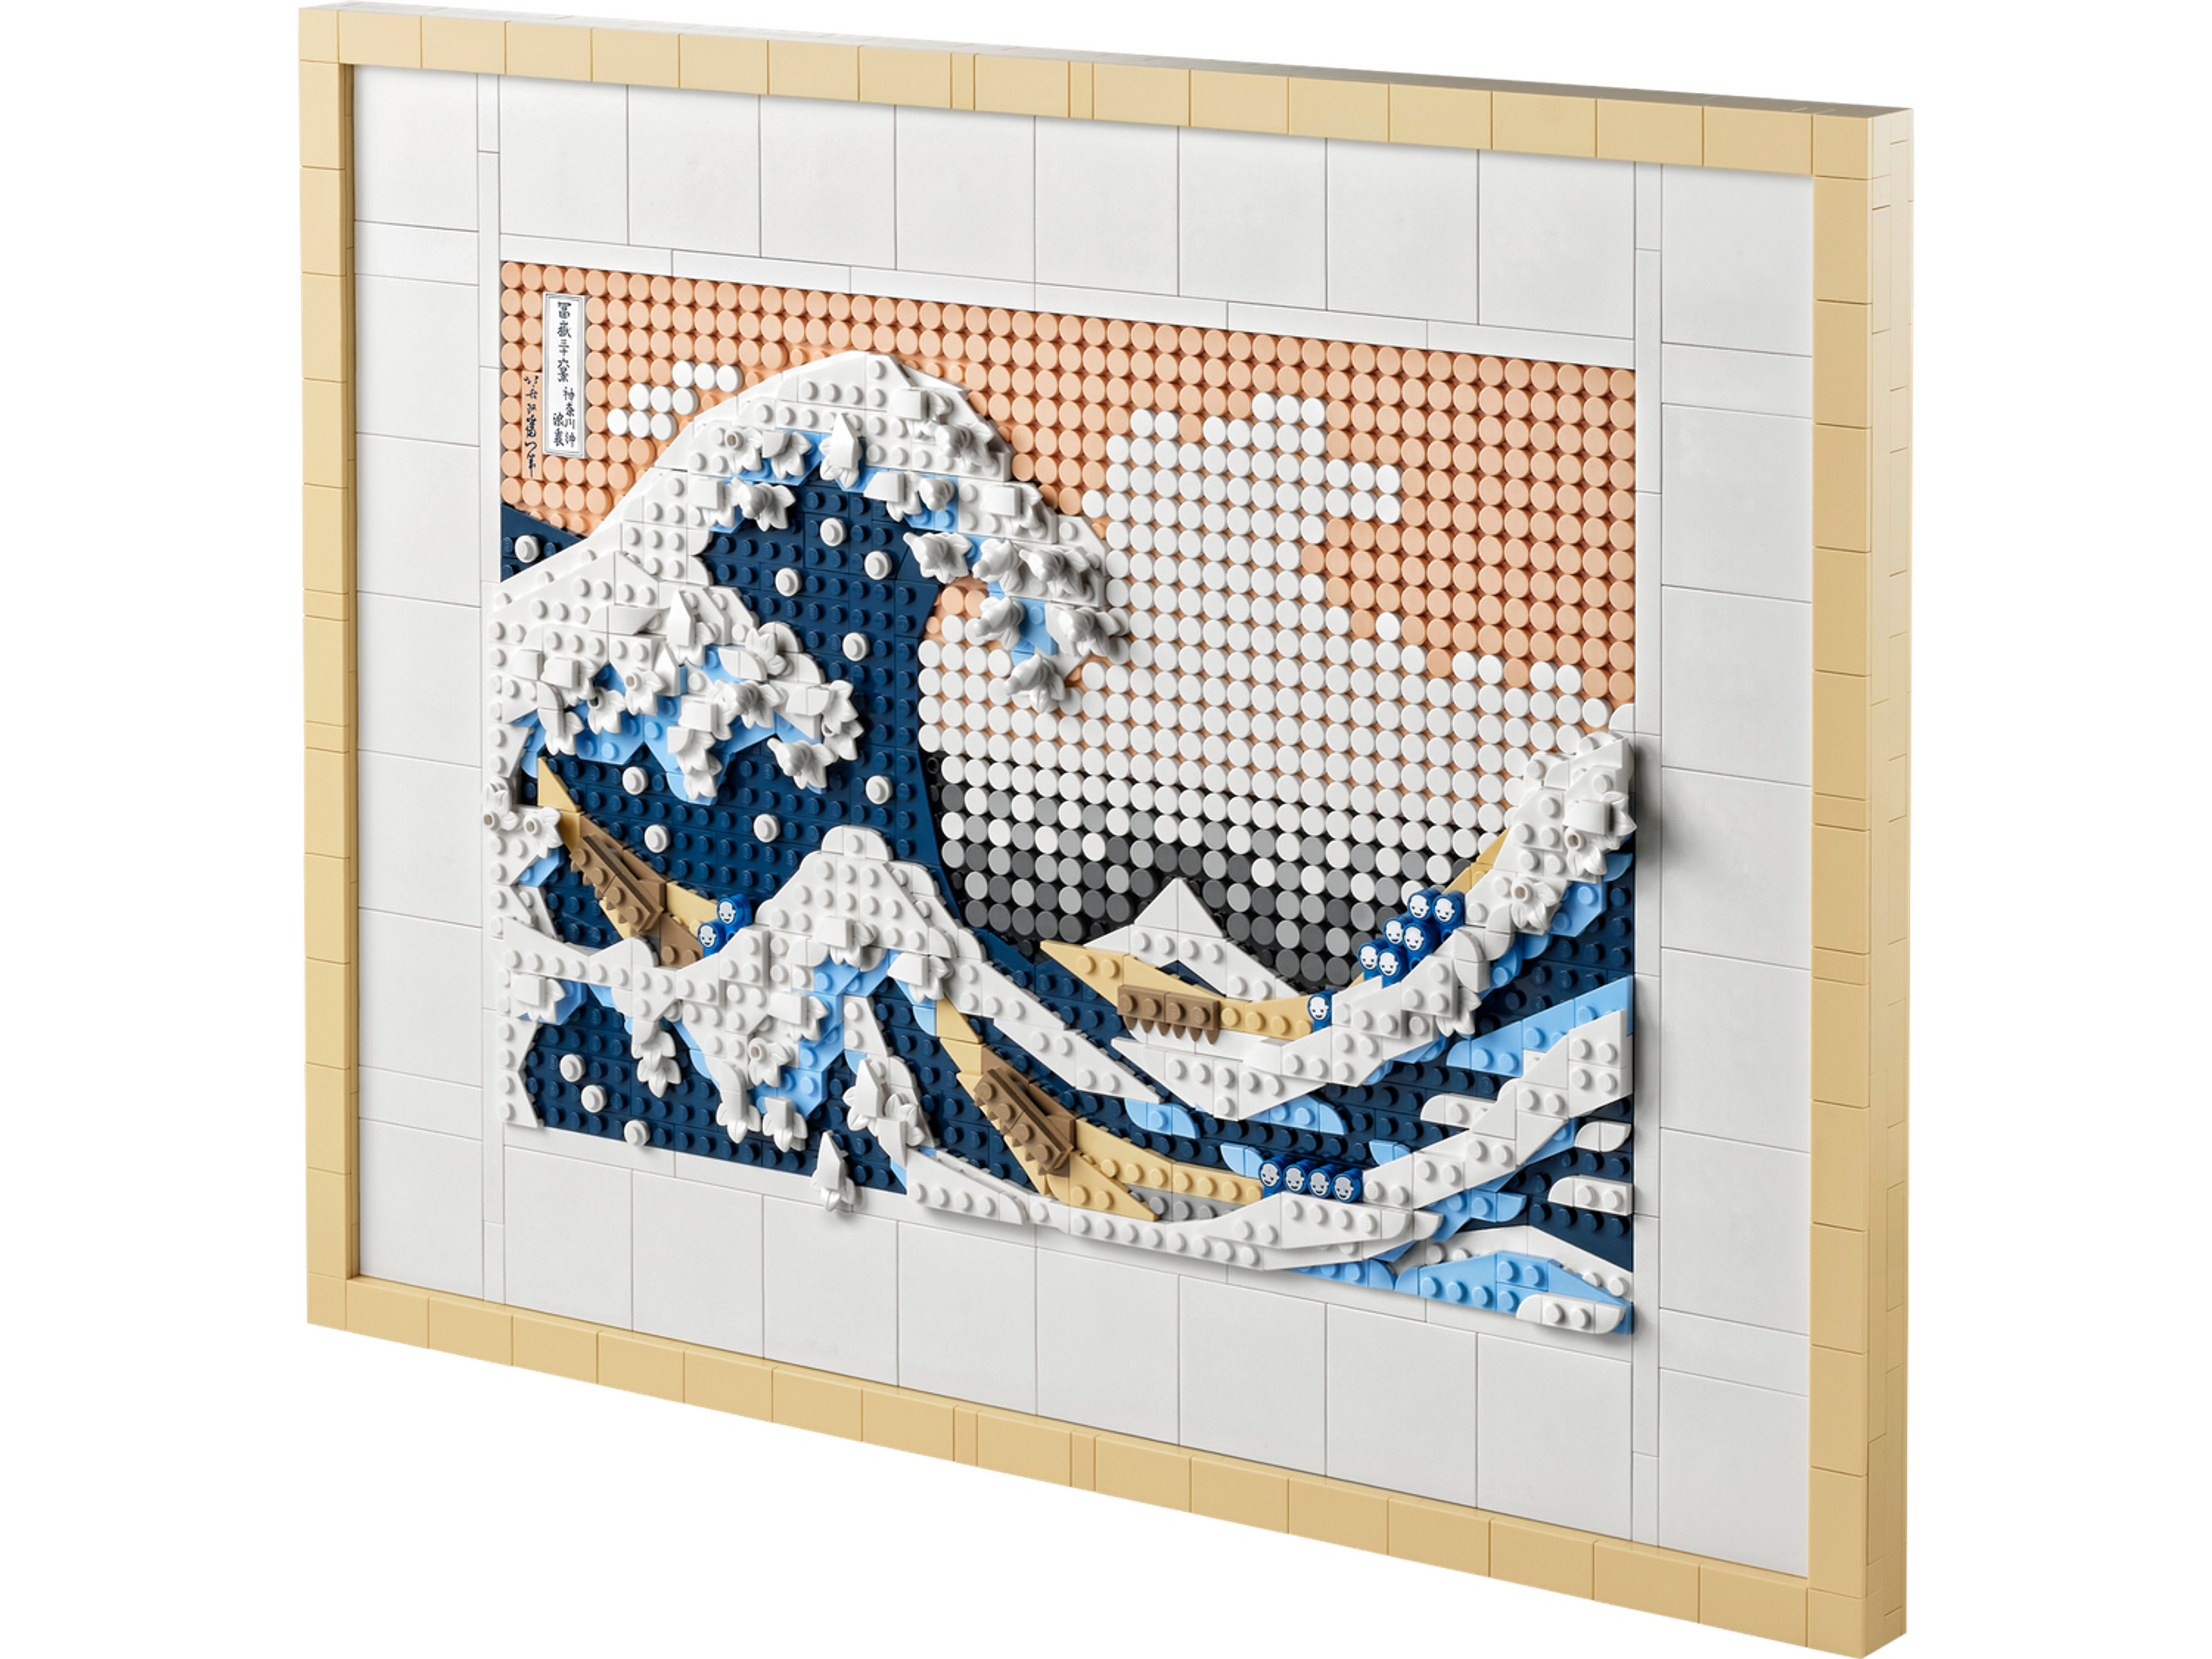 lego.com/en-us/product/hokusai-the-great-wave-31208